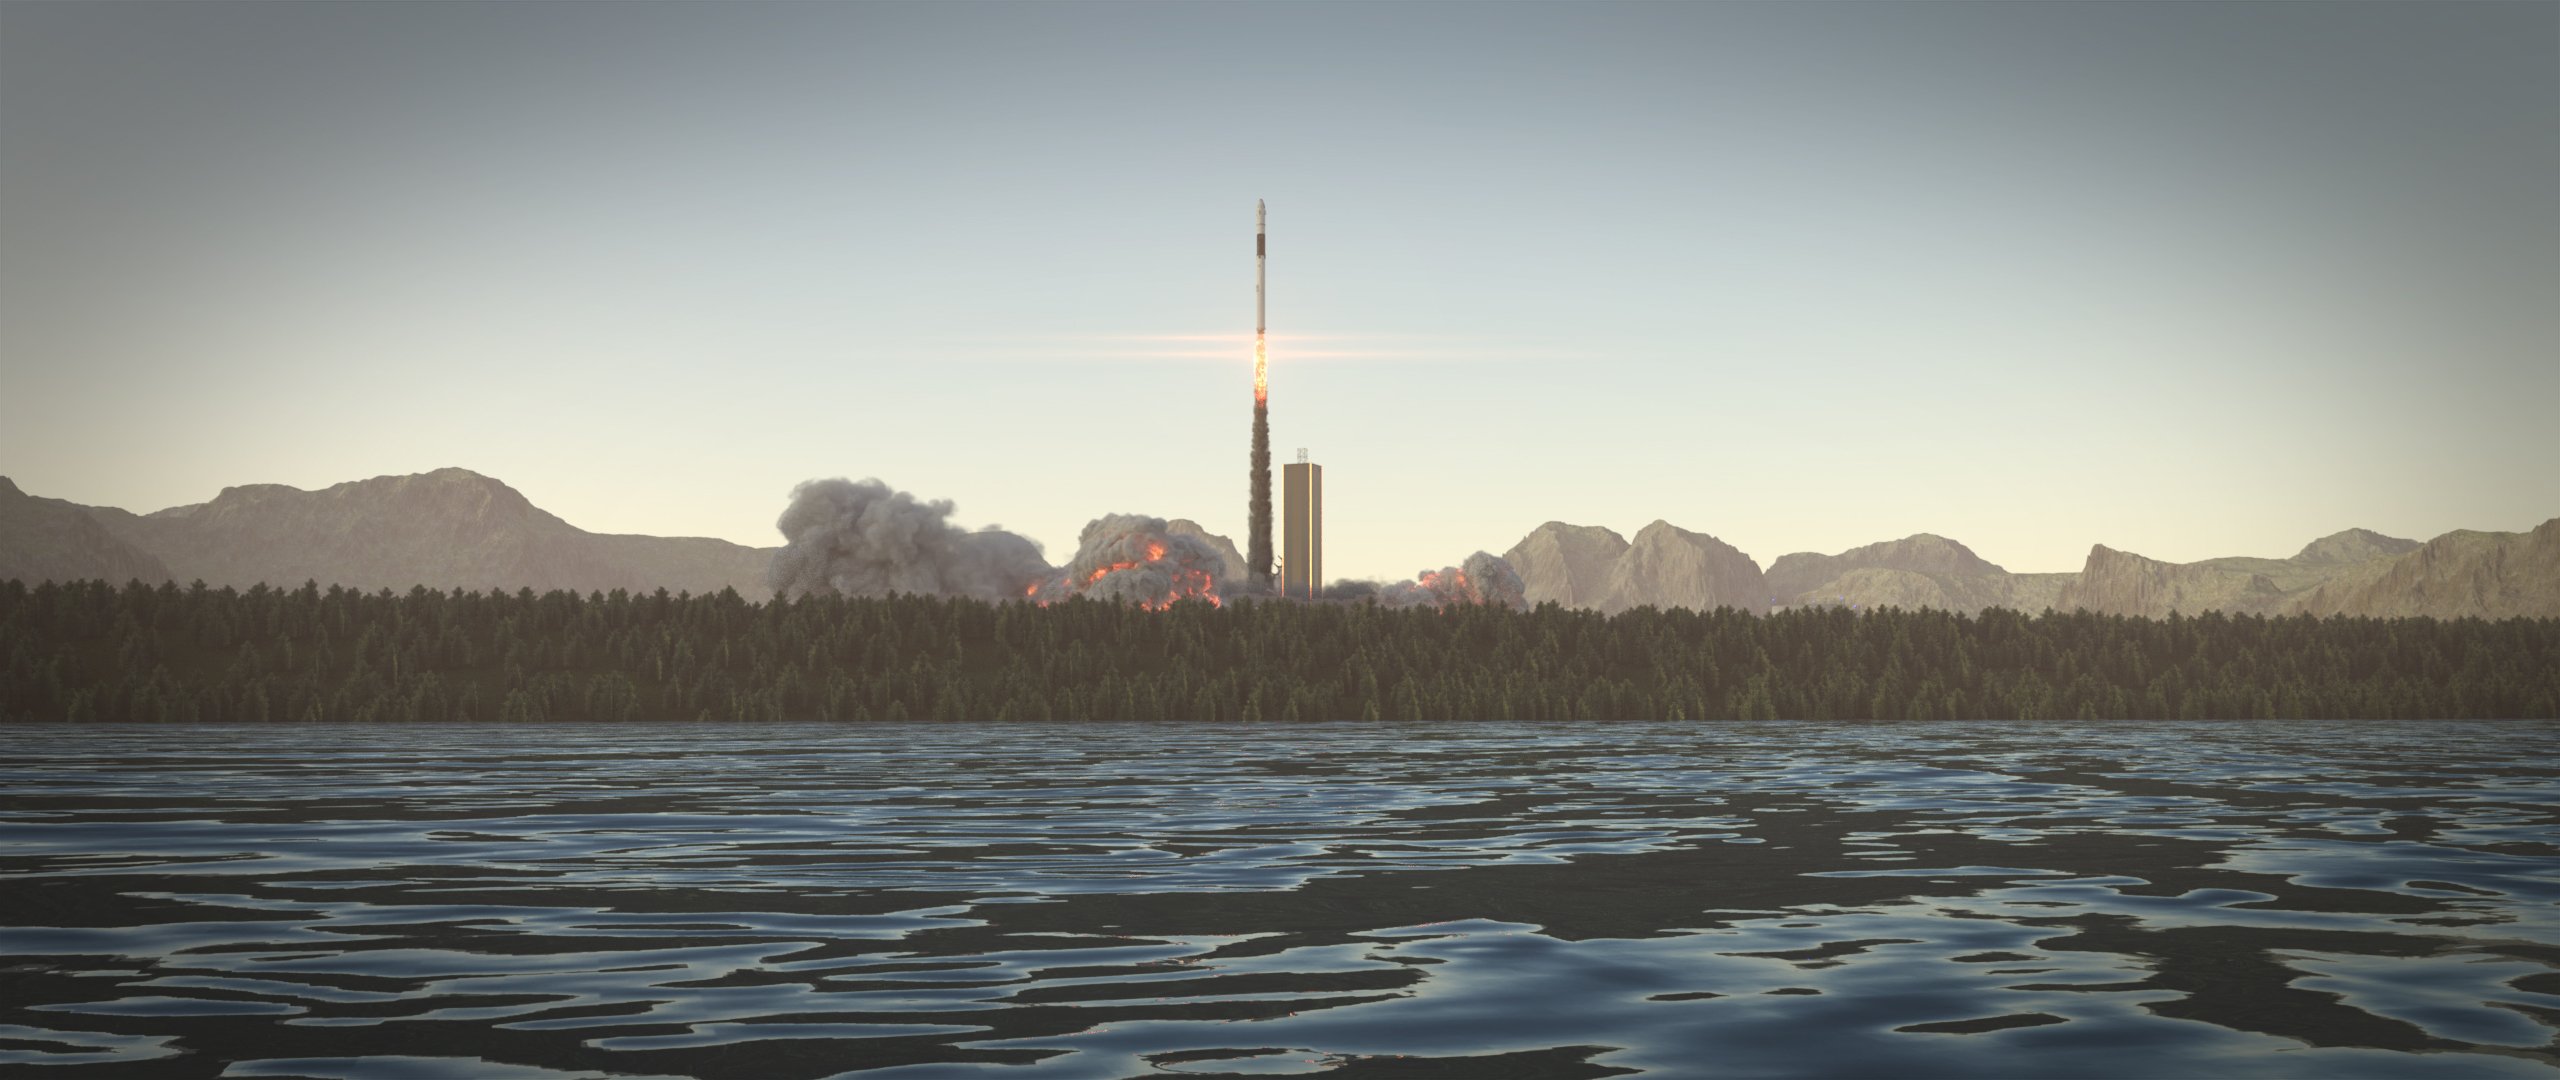 Jupiter 5 Launch Complex by: KindredArts, 3D Models by Daz 3D